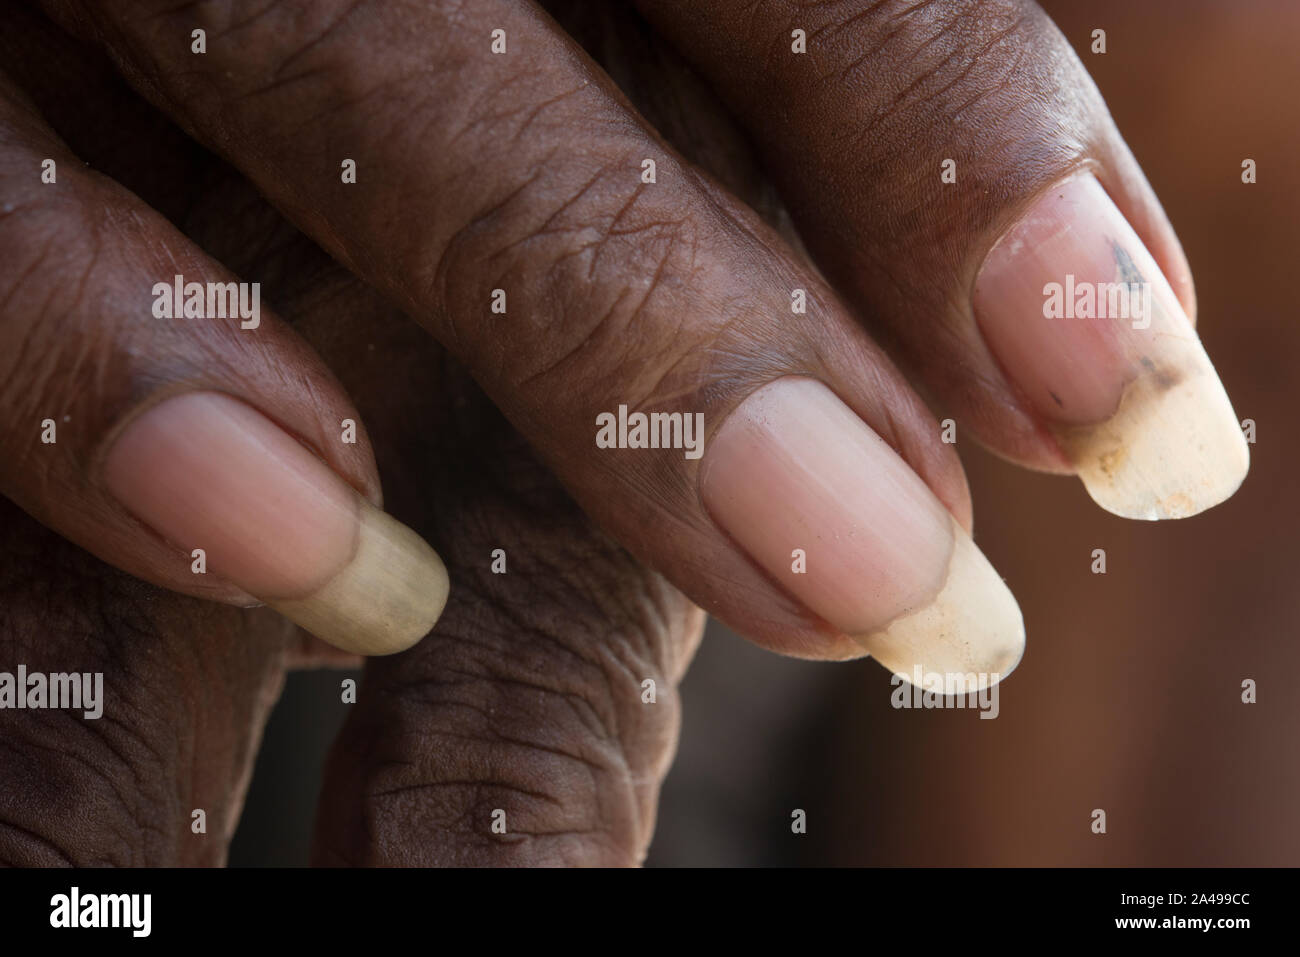 3121 Man Long Nails Images Stock Photos  Vectors  Shutterstock